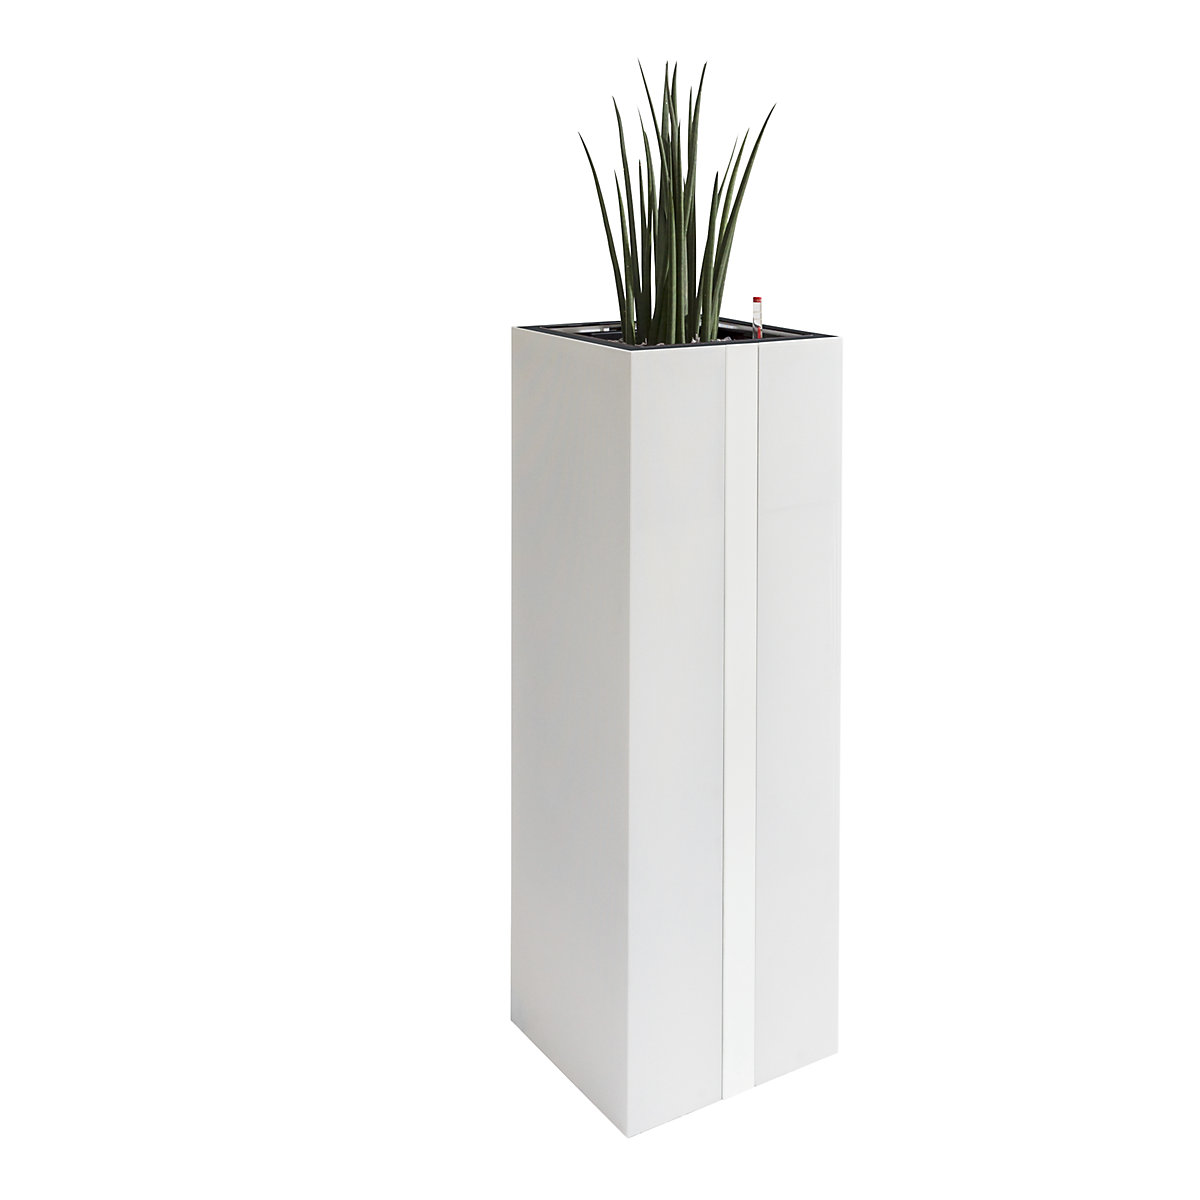 Vaso cubico, senza pianta – C+P, bianco, con efficace assorbimento acustico, alt. x largh. x prof. 1310 x 400 x 400 mm-3